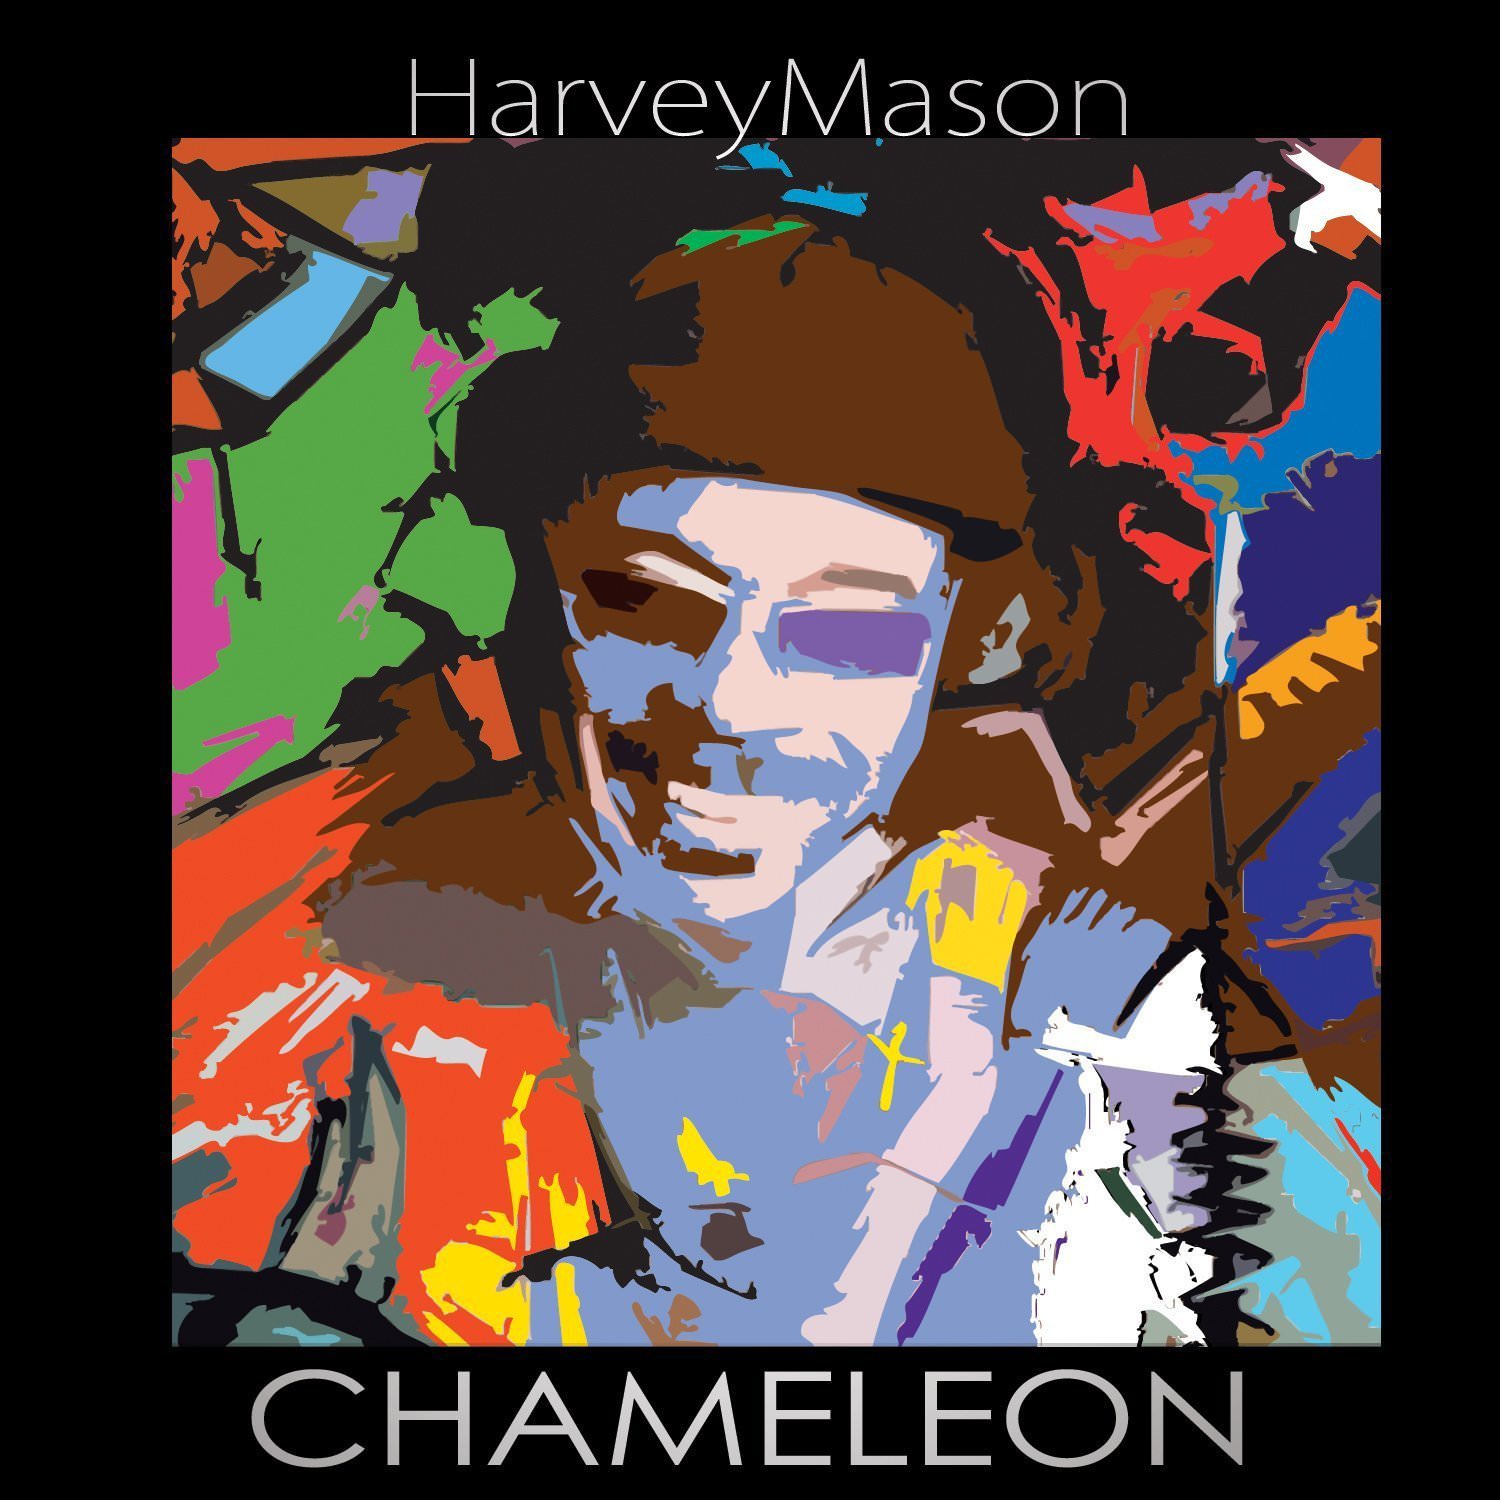 Harvey Mason - Chameleon (2014) [HDTracks FLAC 24bit/96kHz]